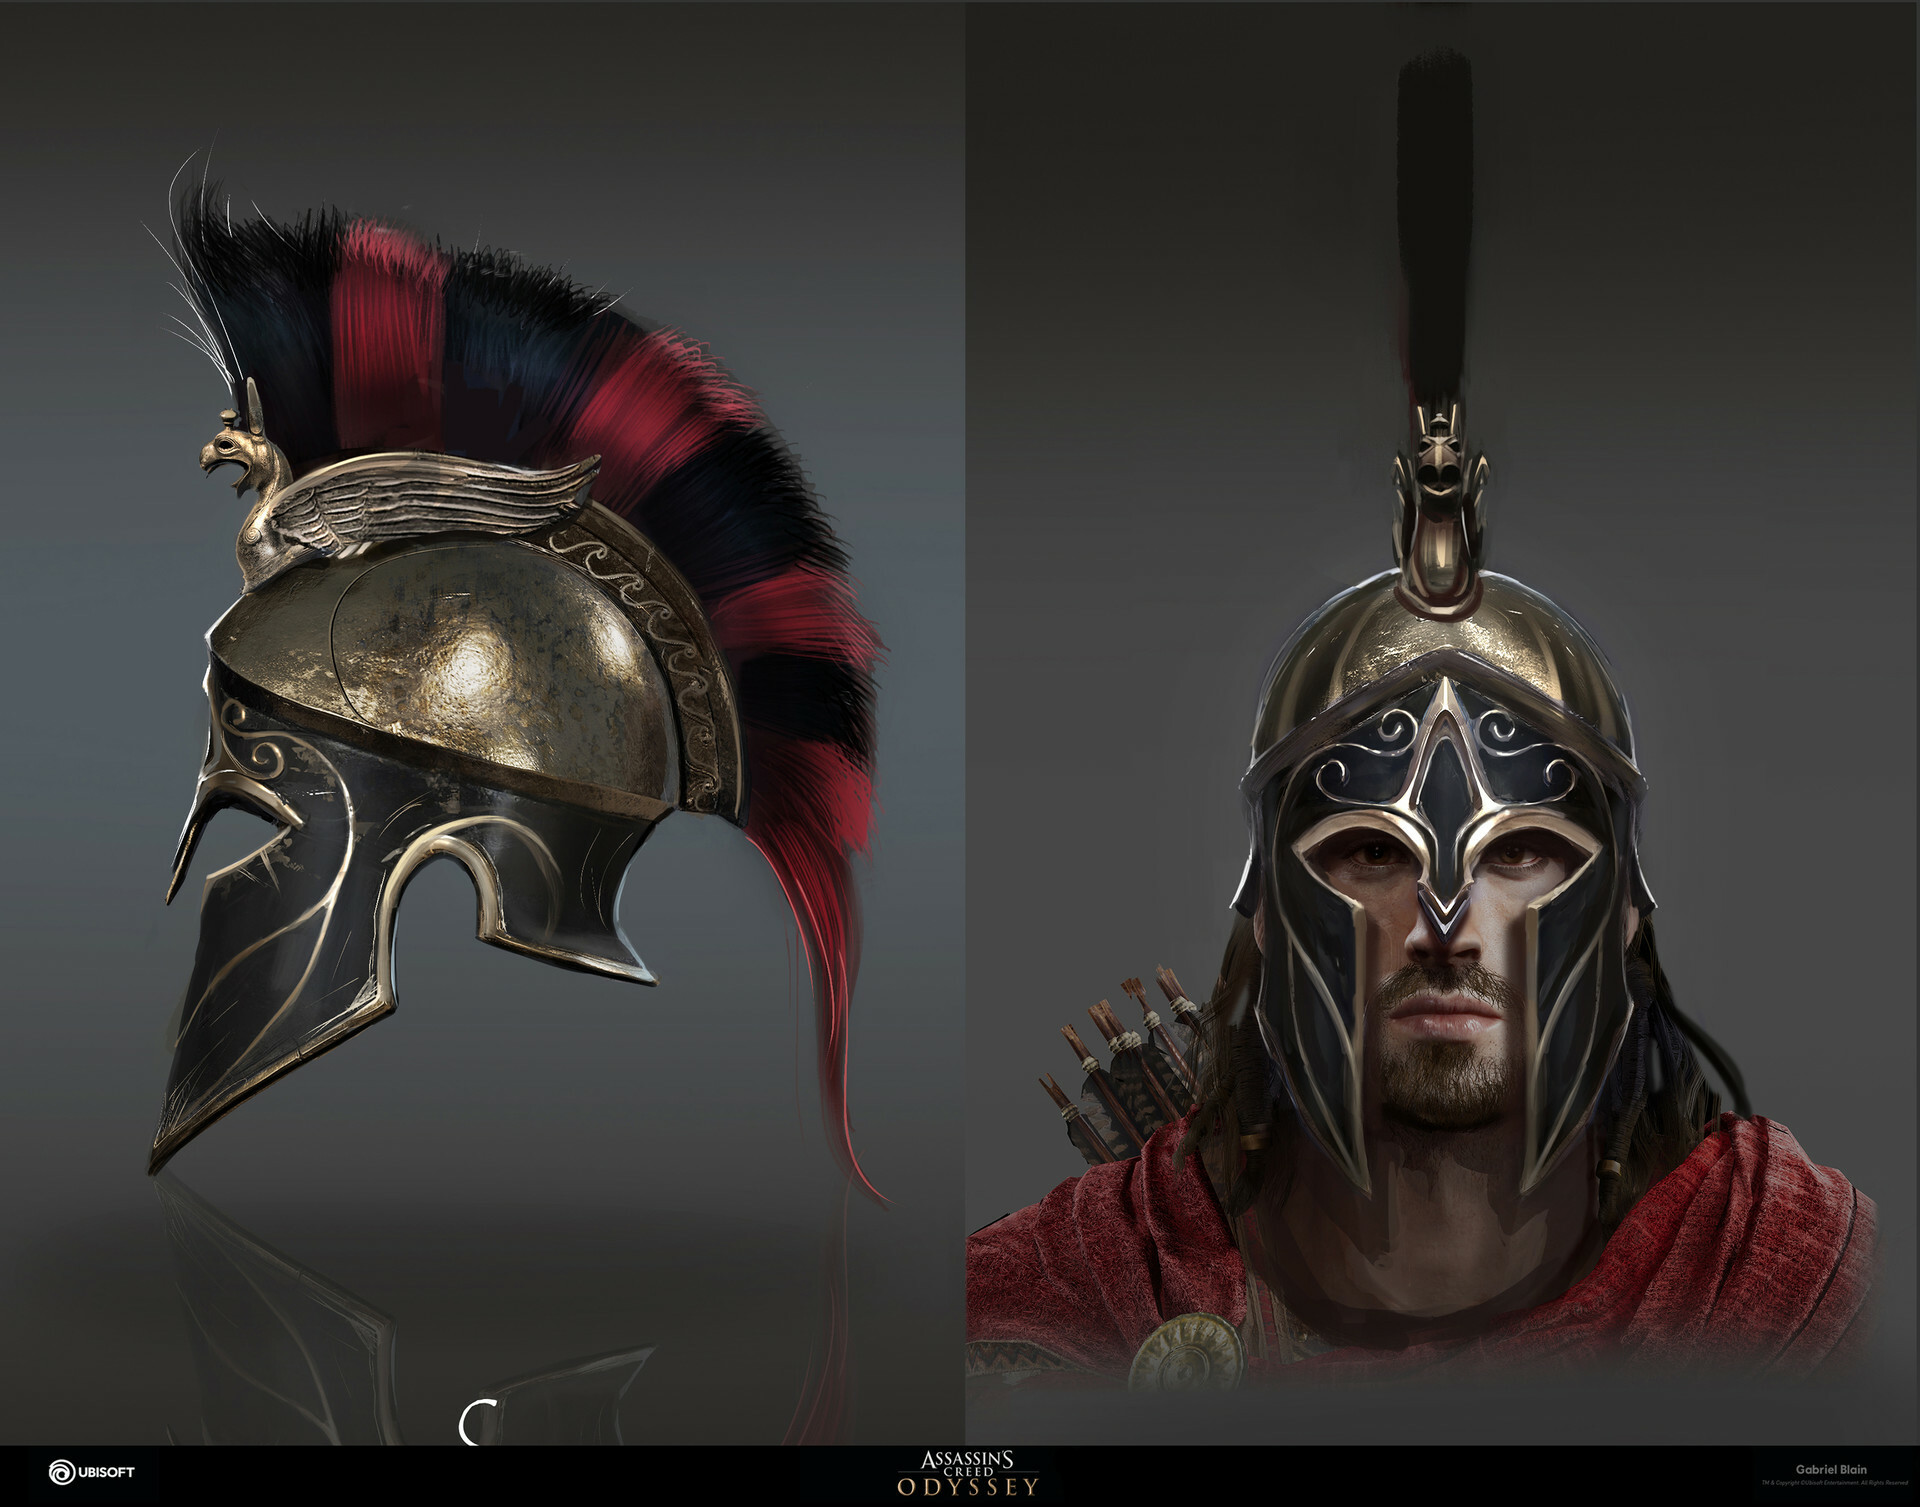 Ассасин где гребень. Assassin's Creed Odyssey шлем. Шлем спартанца Assassins Creed. Assassin's Creed Odyssey Spartan Helmet. Гоплит в Коринфском шлеме.